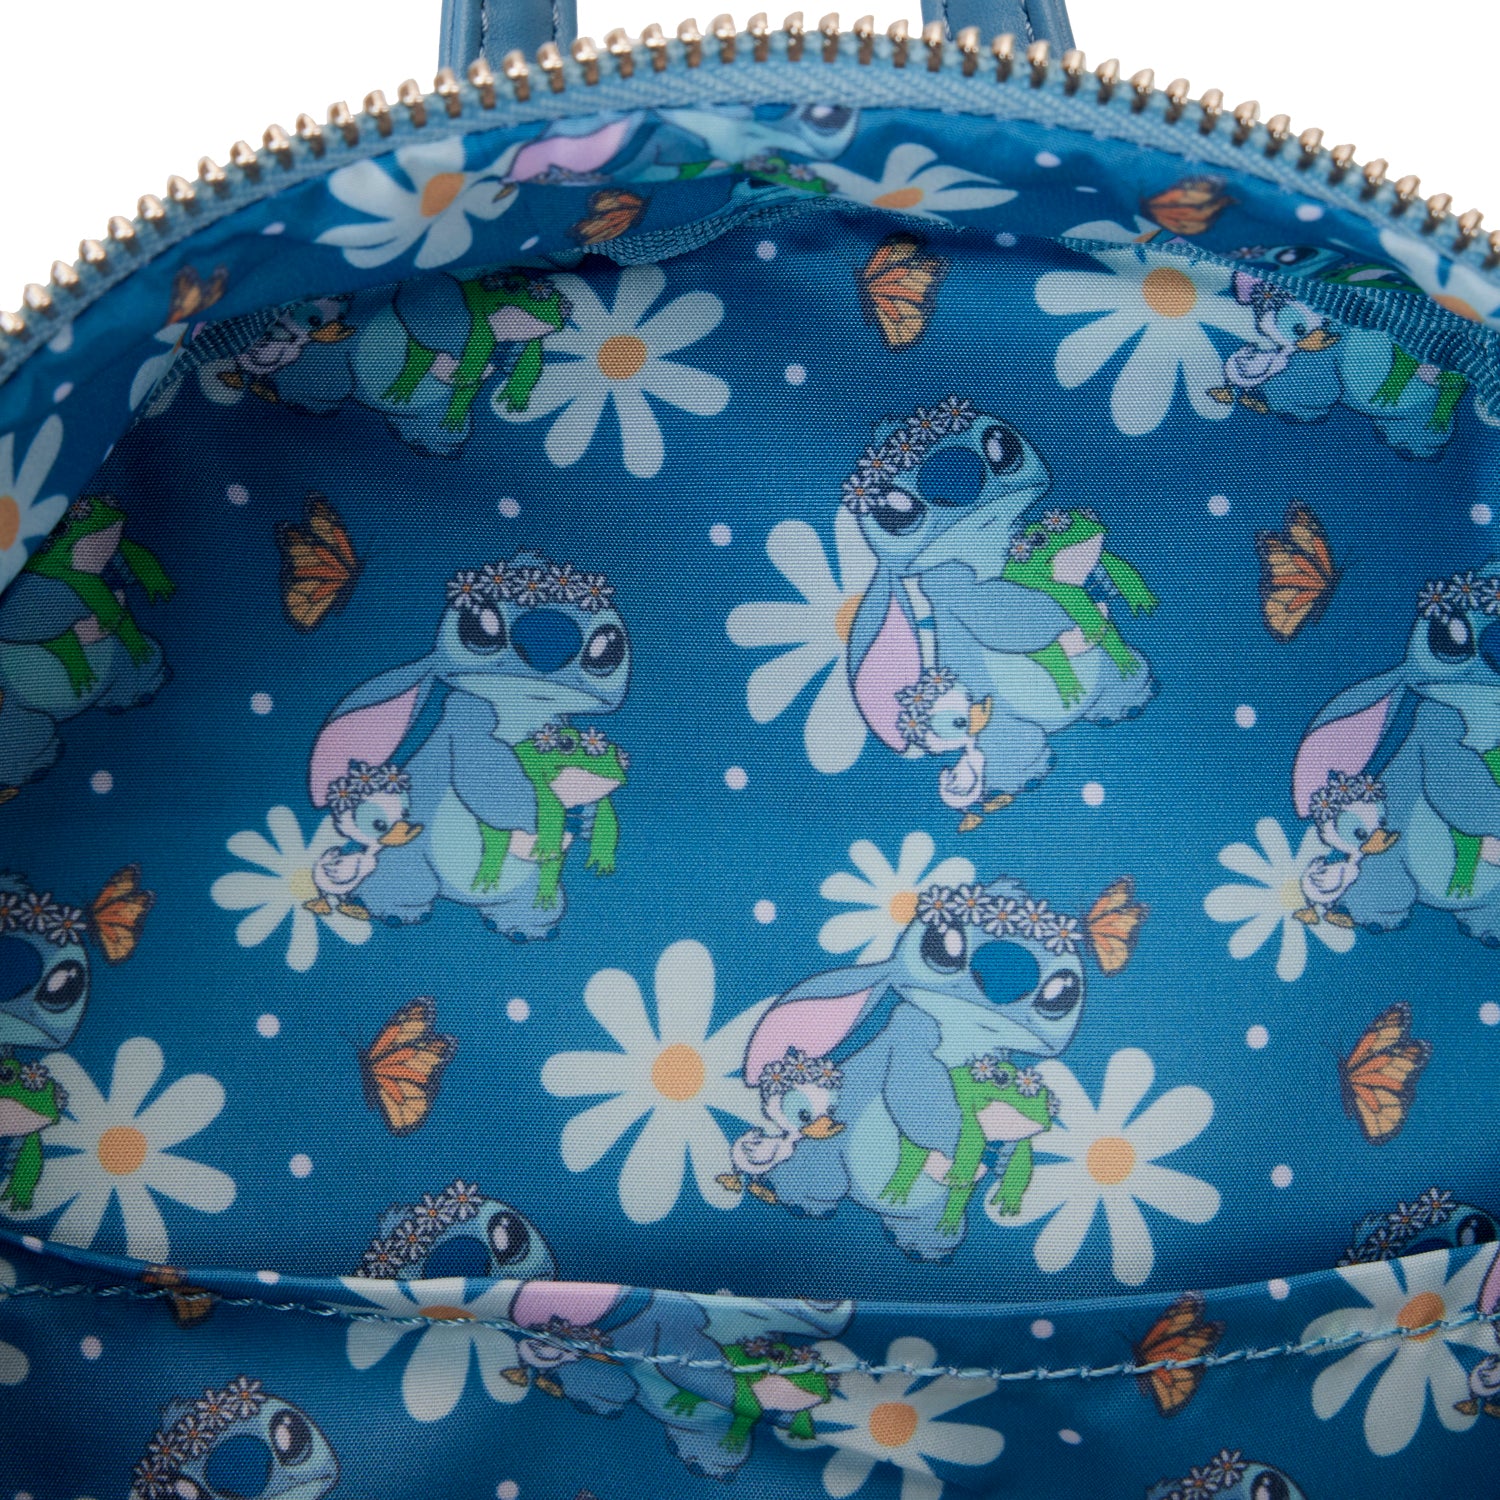 Disney | Lilo and Stitch Springtime Cosplay Mini Backpack